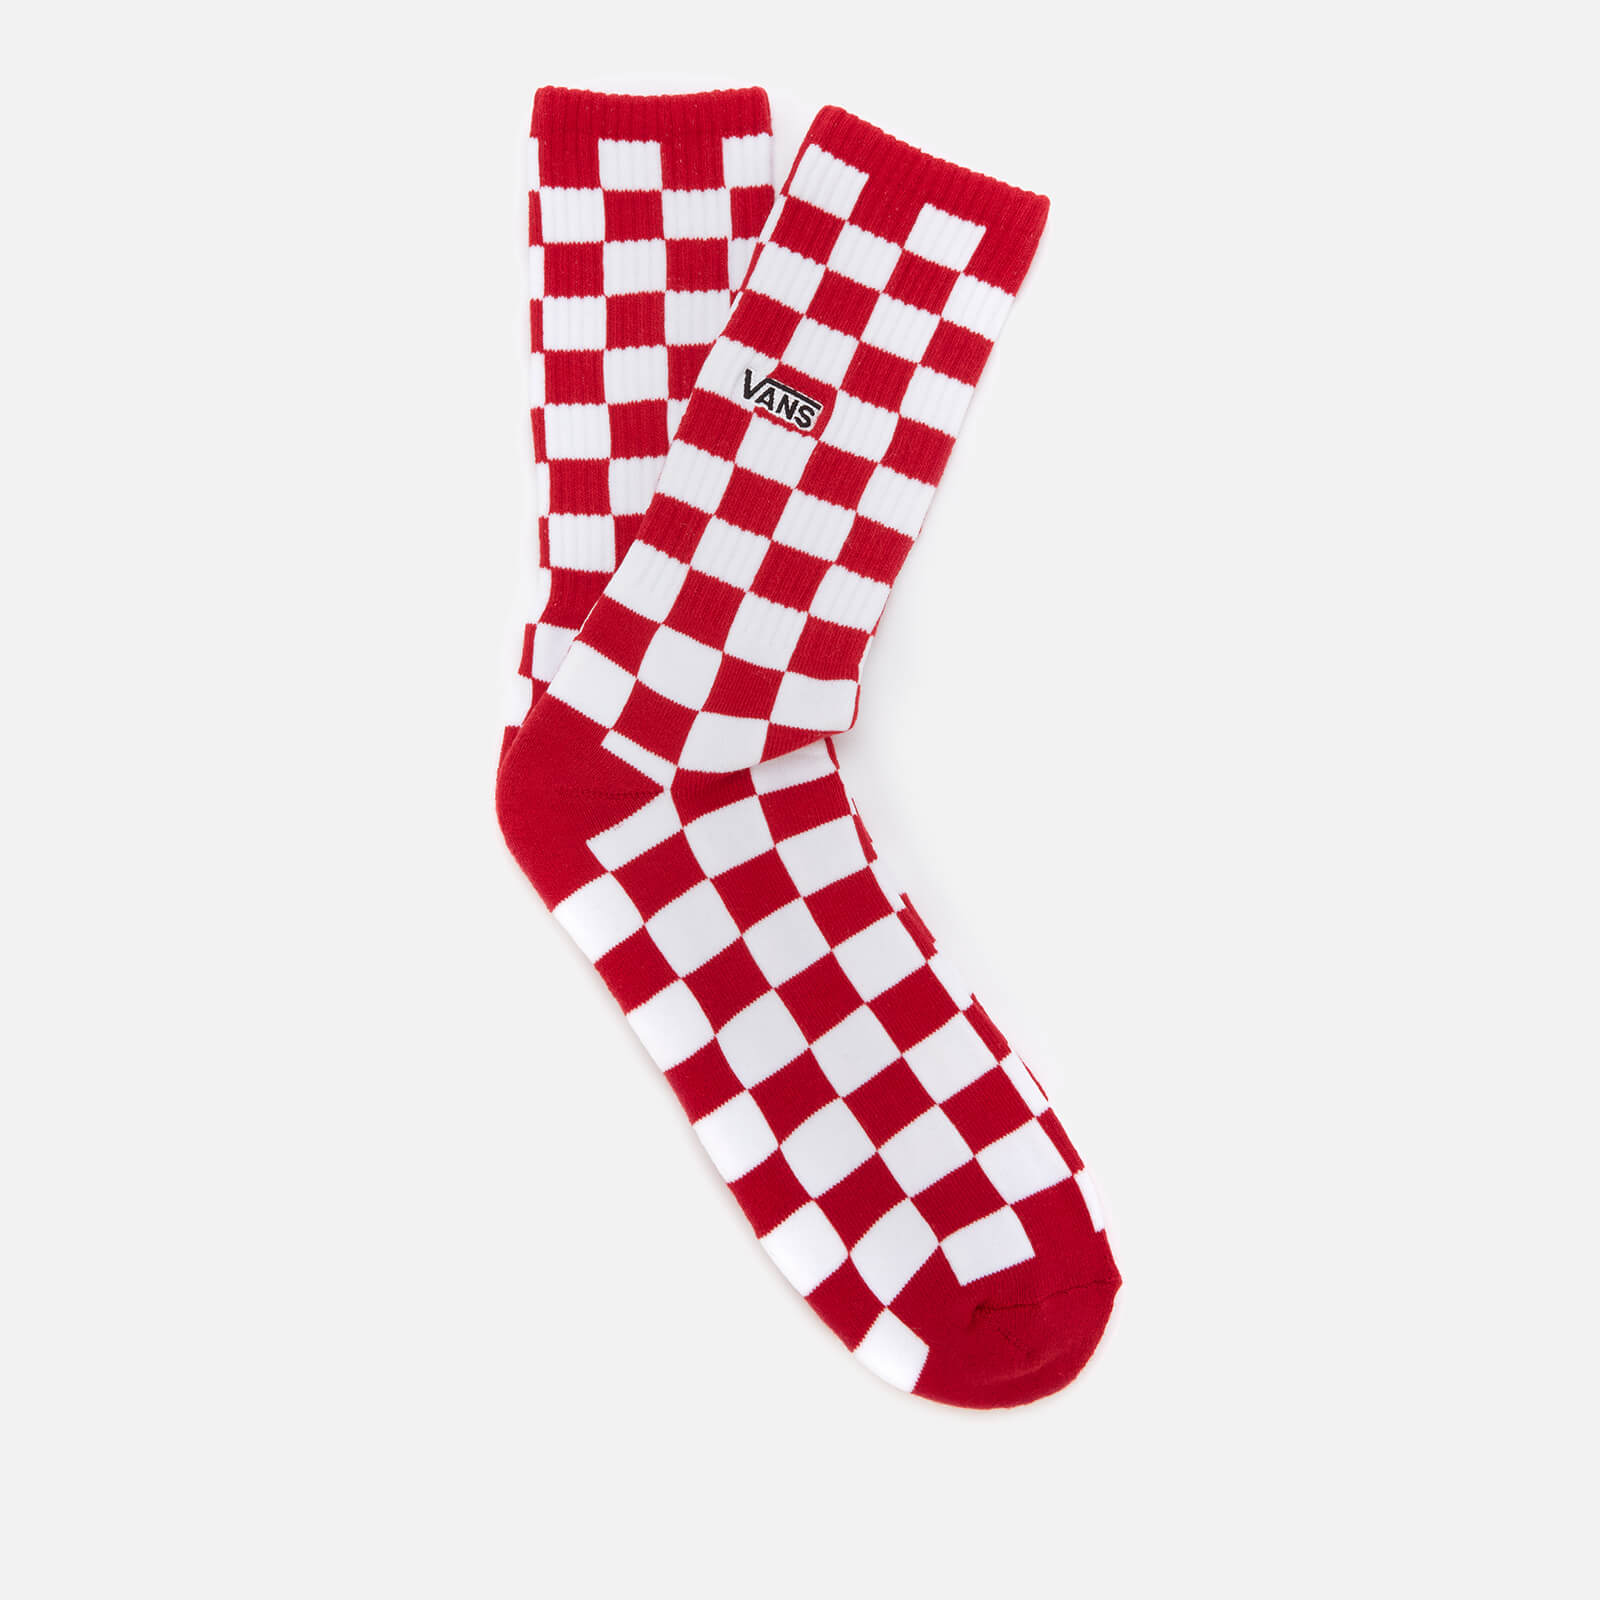 Vans Men's Checkerboard Crew Socks - Red/White Check